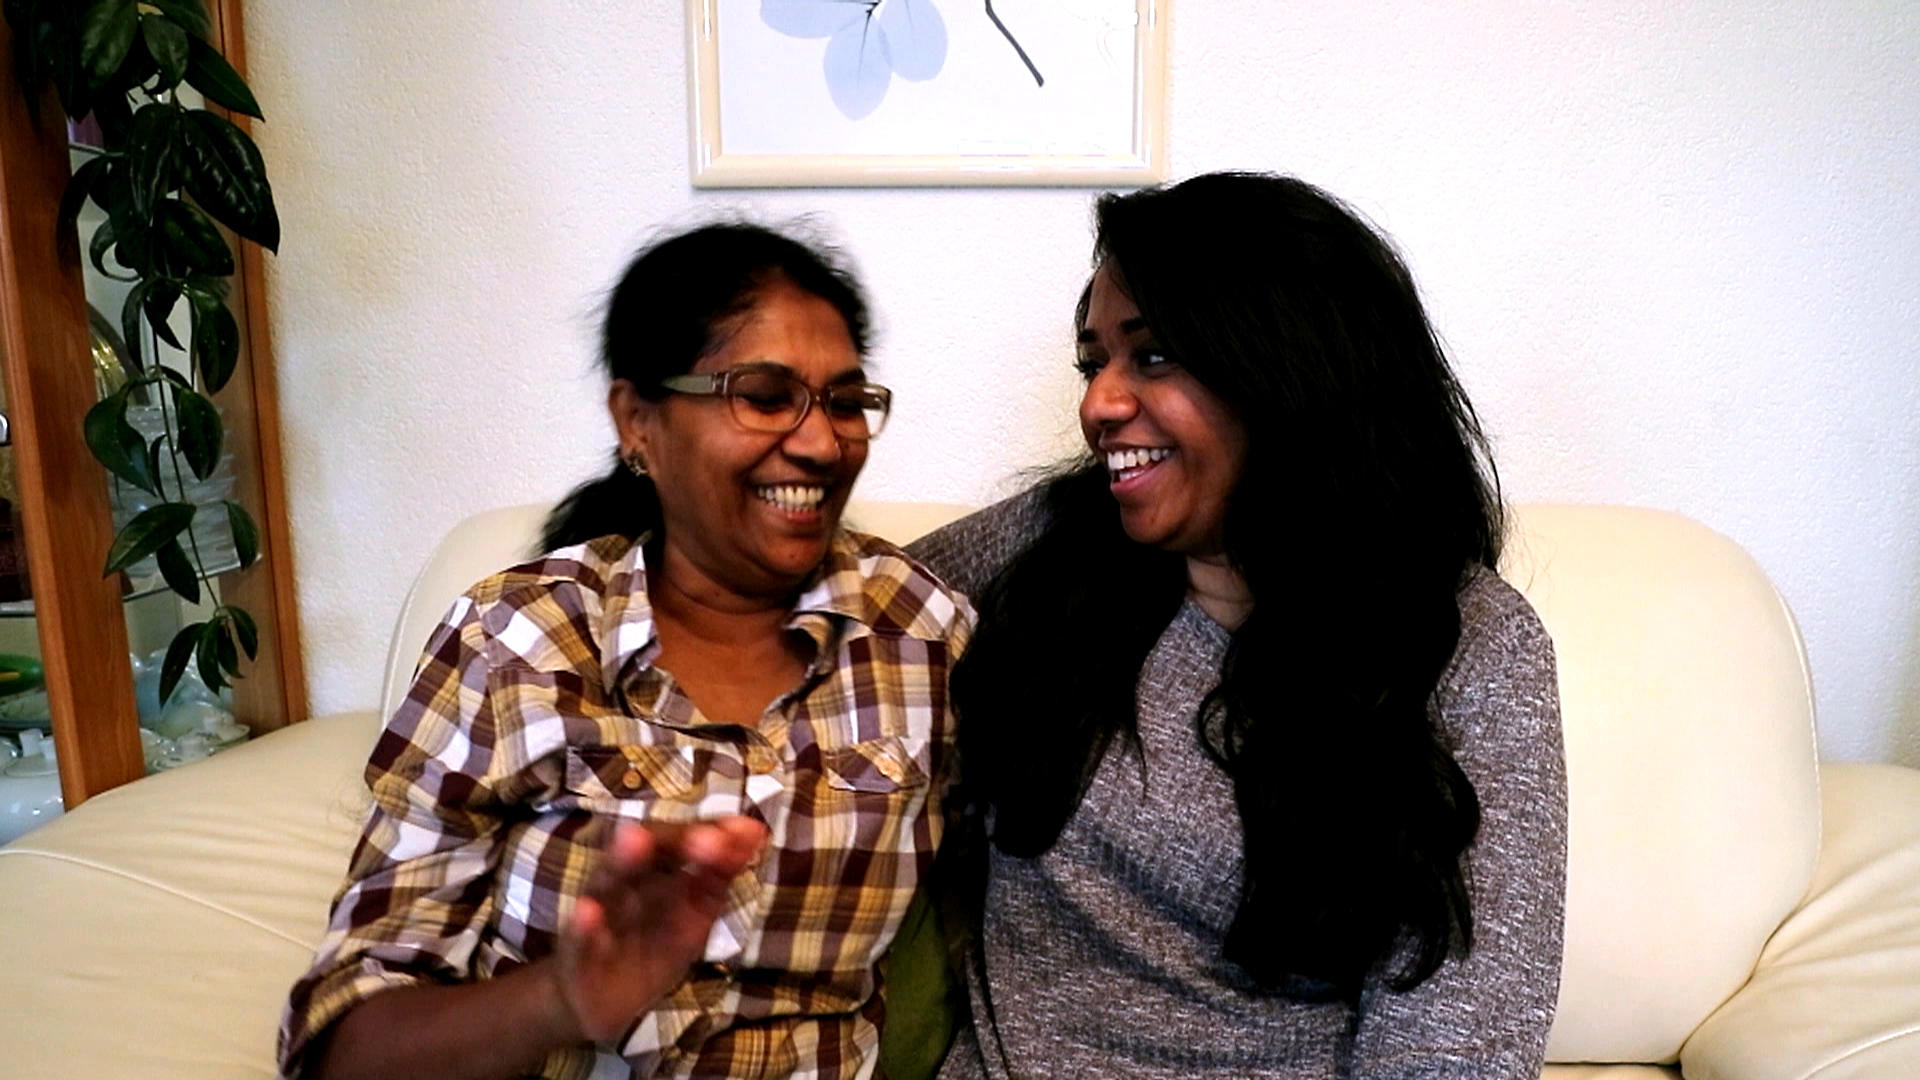 Tama and her mum sit laughing